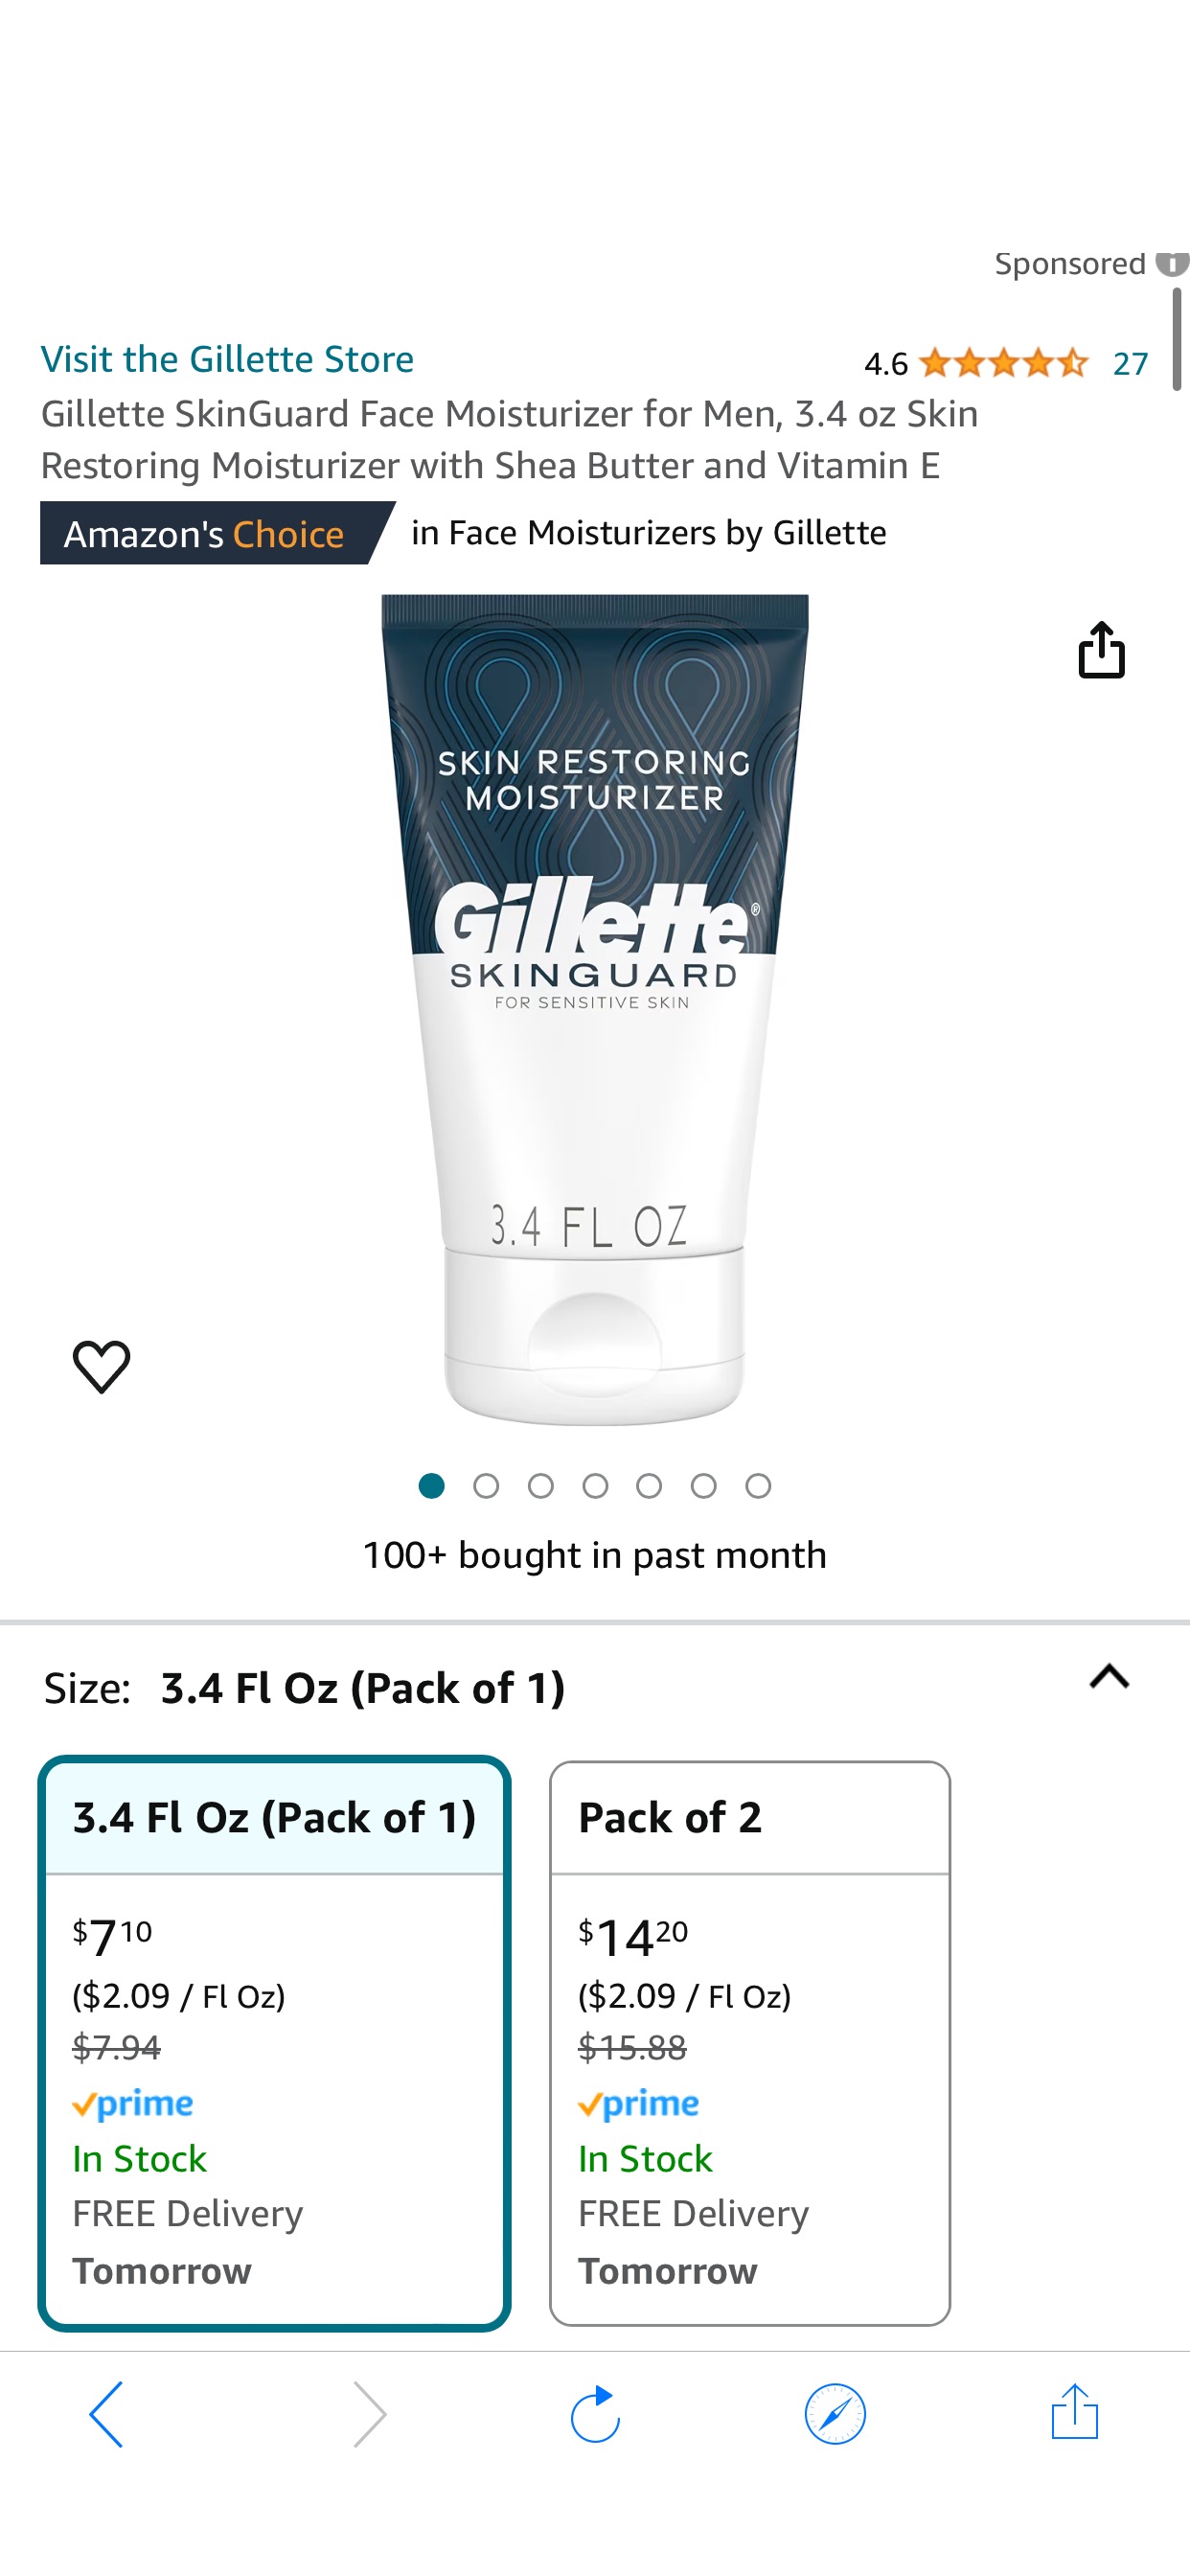 Amazon.com: Gillette SkinGuard Face Moisturizer for Men, 3.4 oz Skin Restoring Moisturizer with Shea Butter and Vitamin E : Everything Else 男士保湿霜